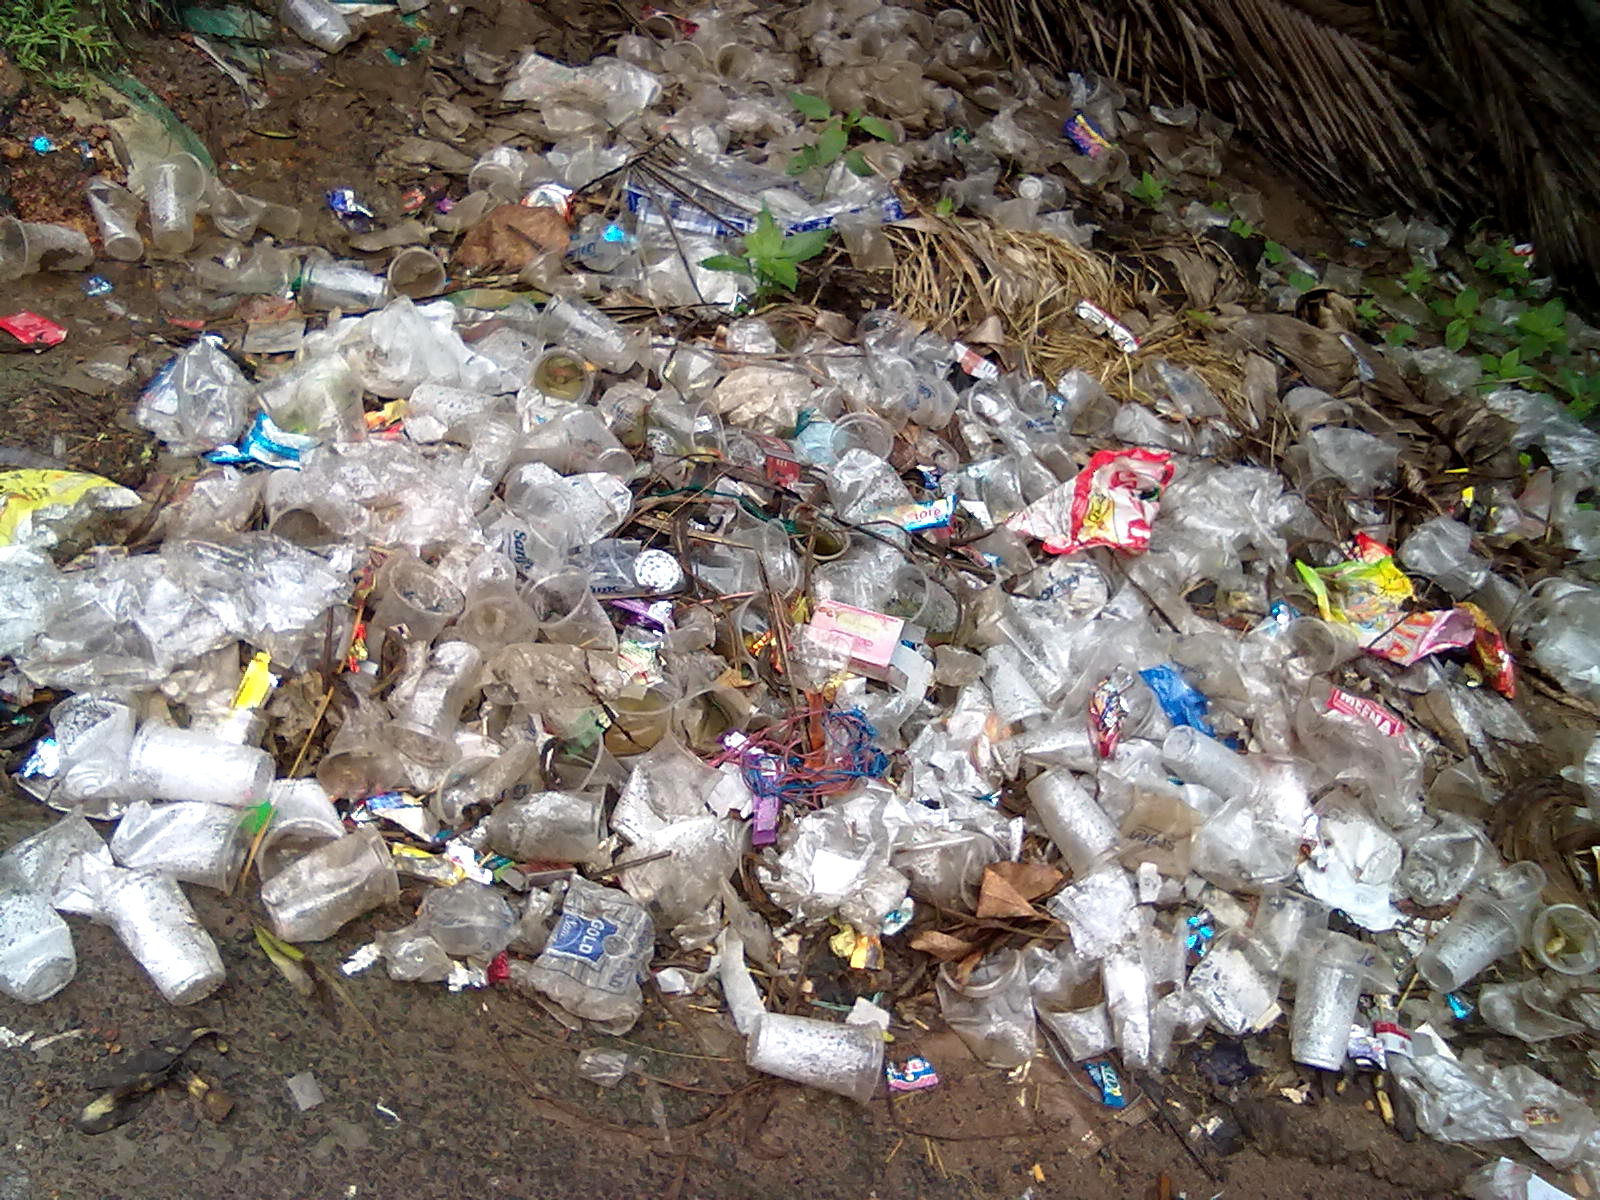 US seeks allies on global plastic pollution treaty, Reuters reports